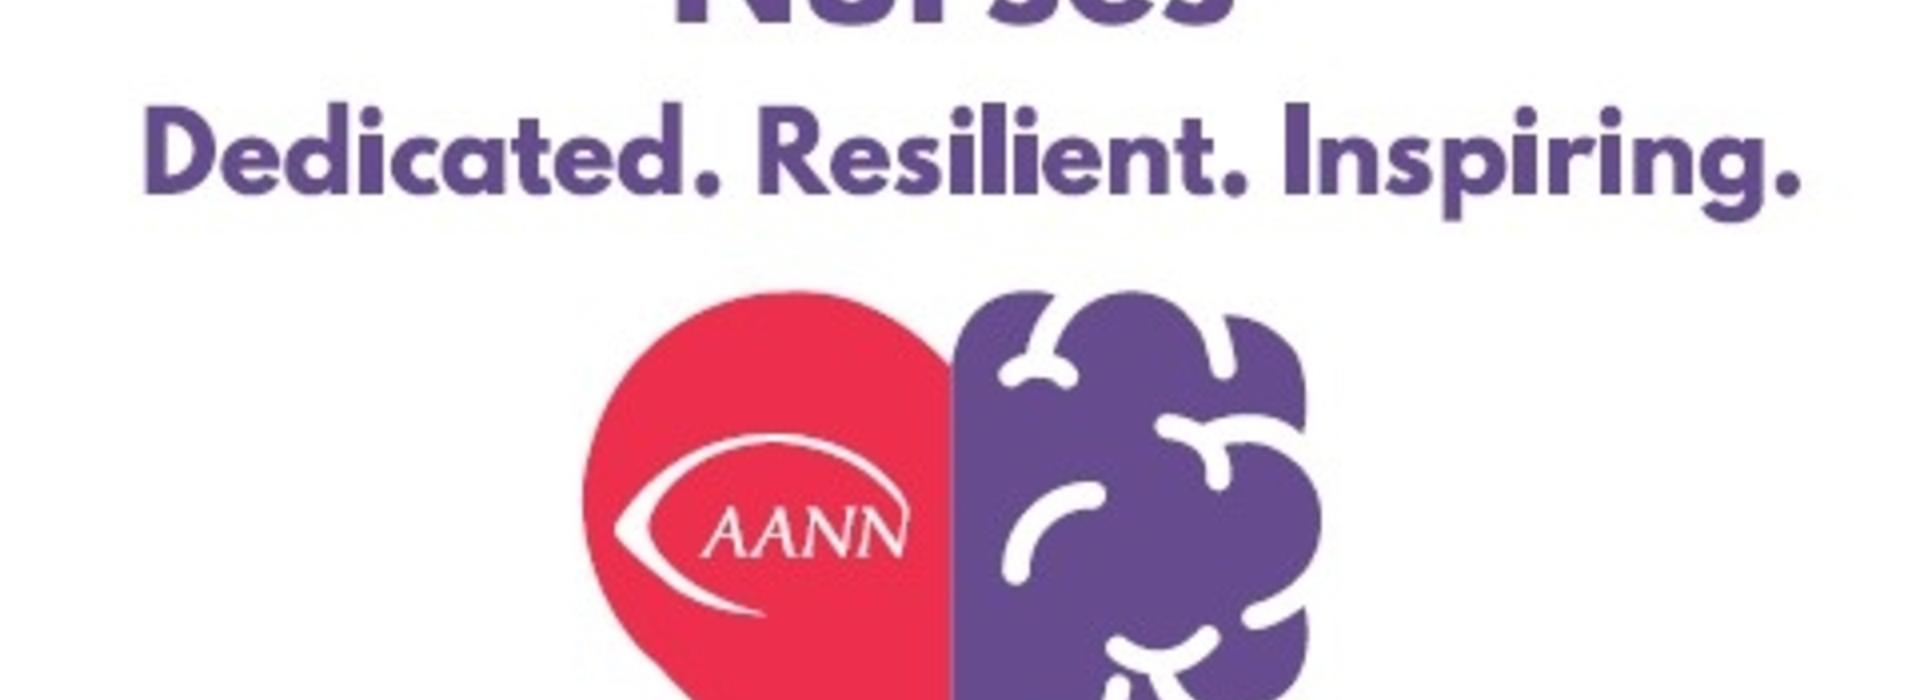 Neuroscience Nurses Week Logo